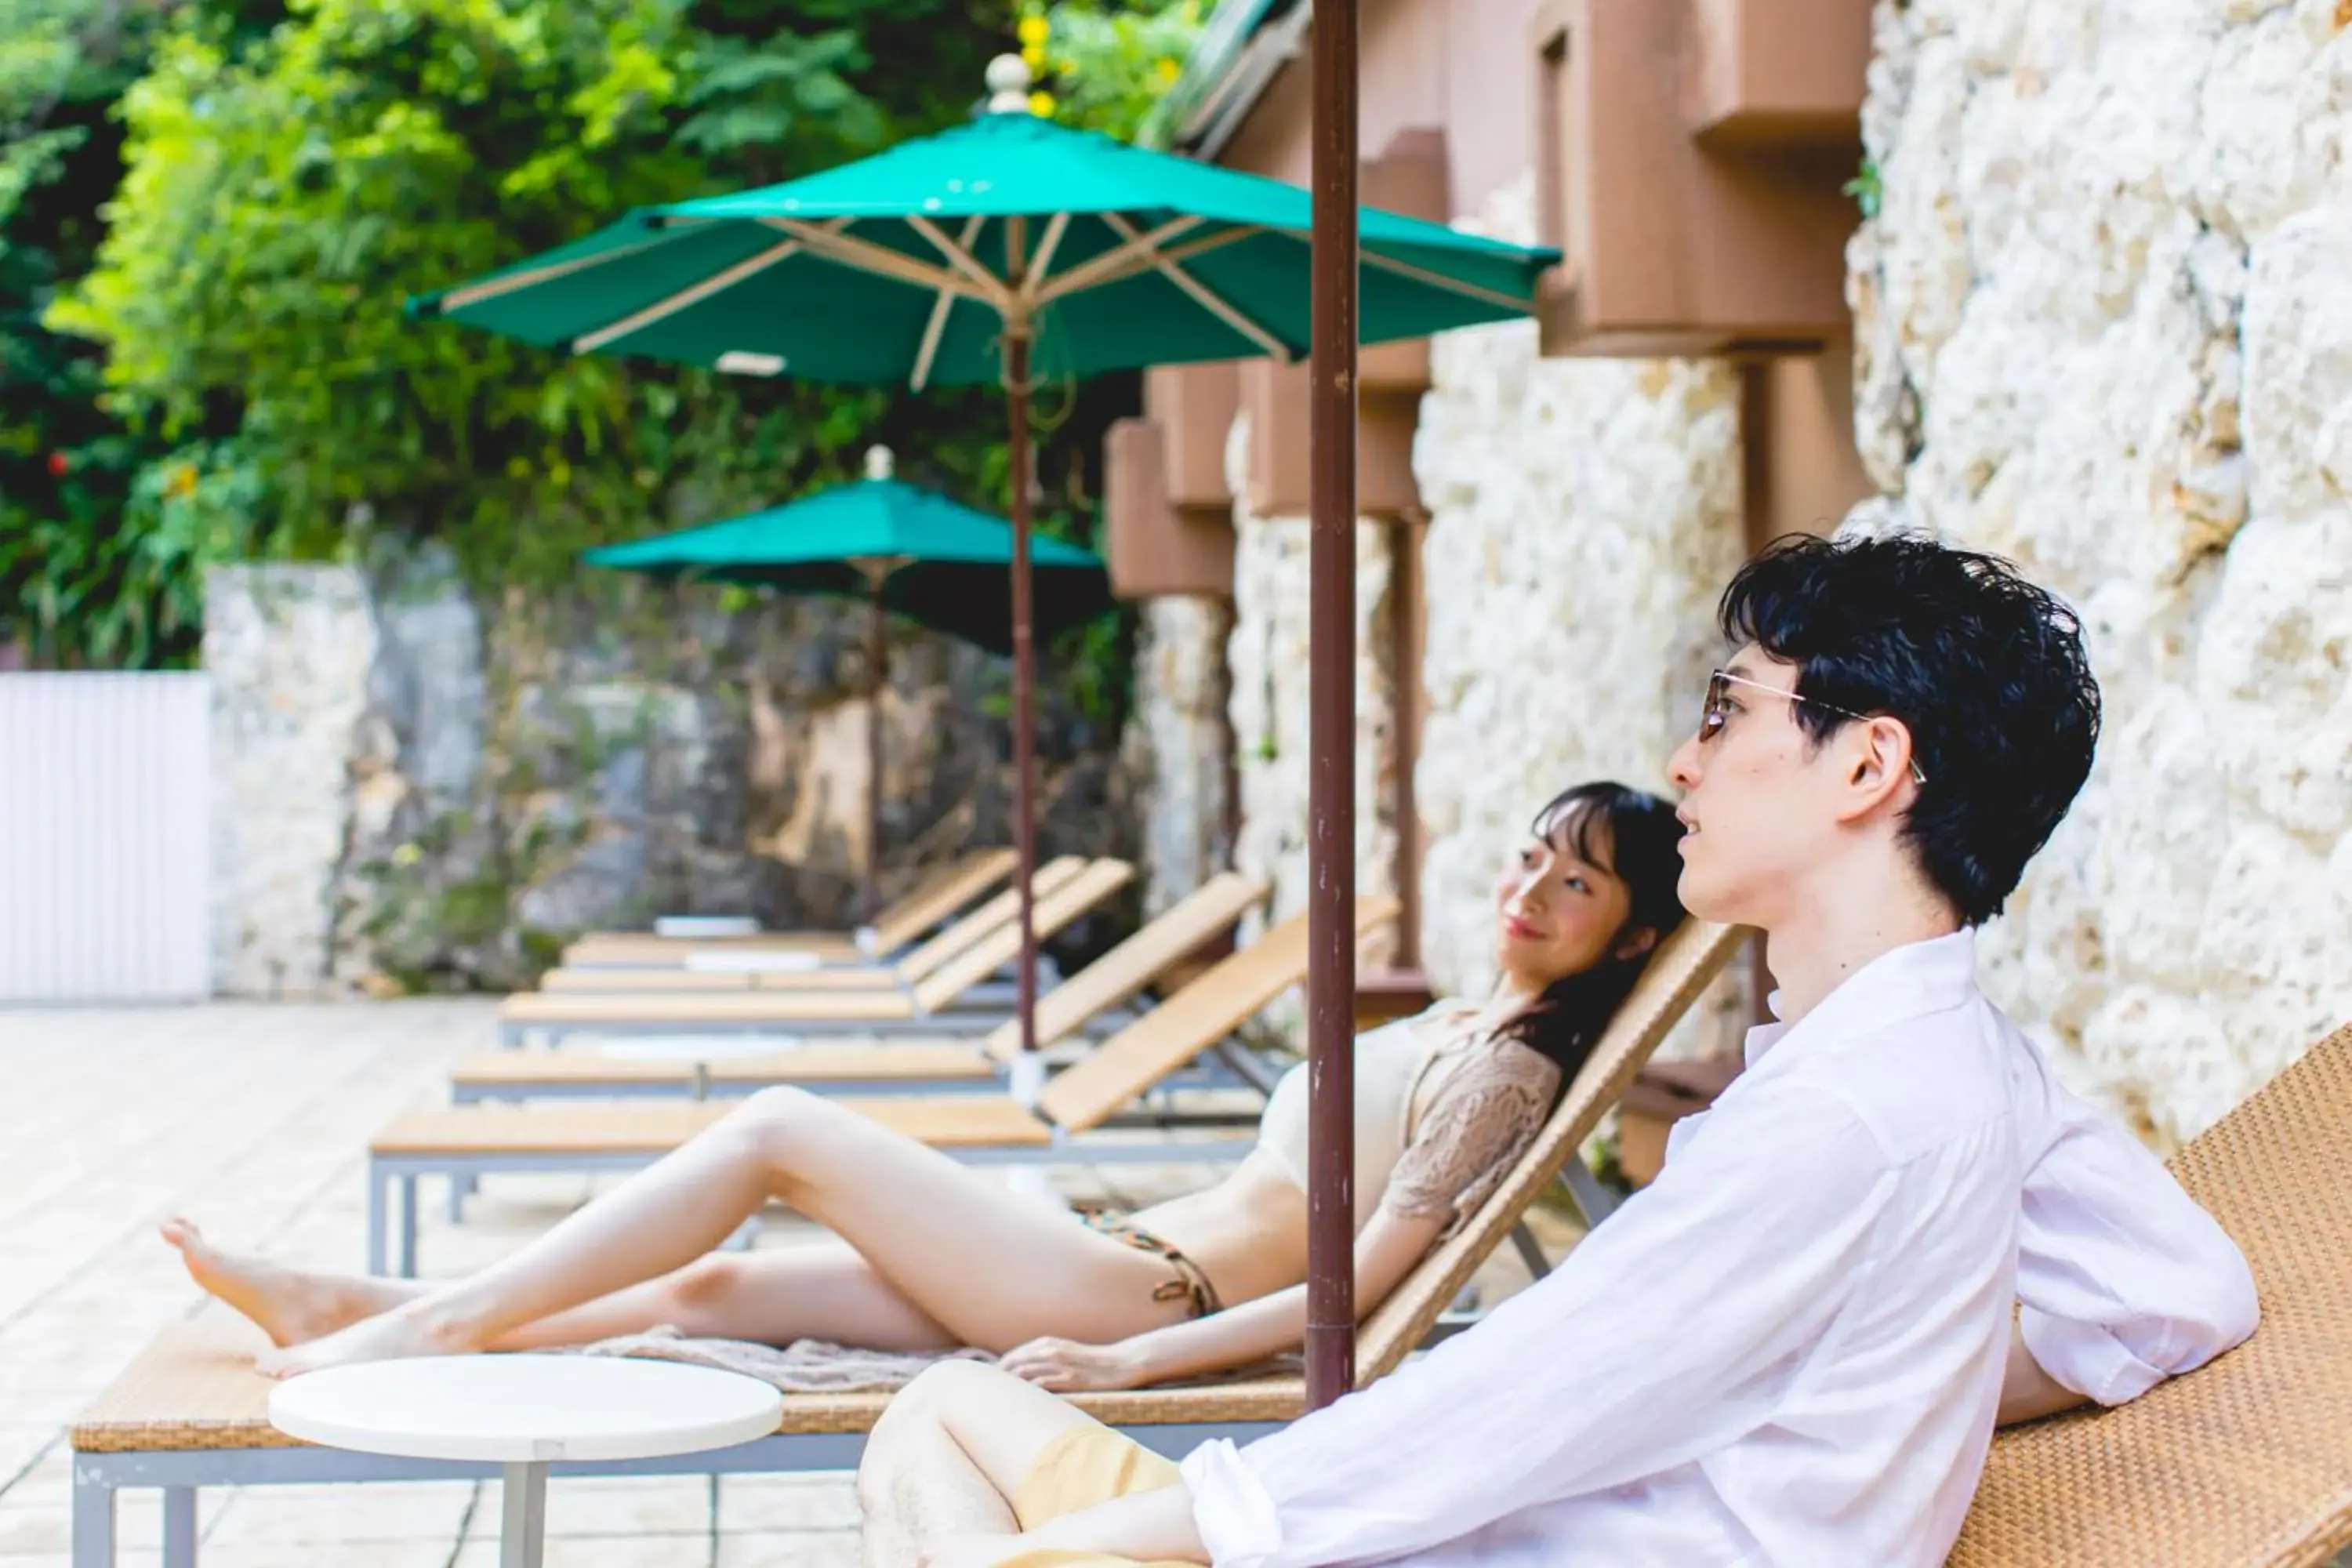 Swimming pool in Okinawa Harborview Hotel